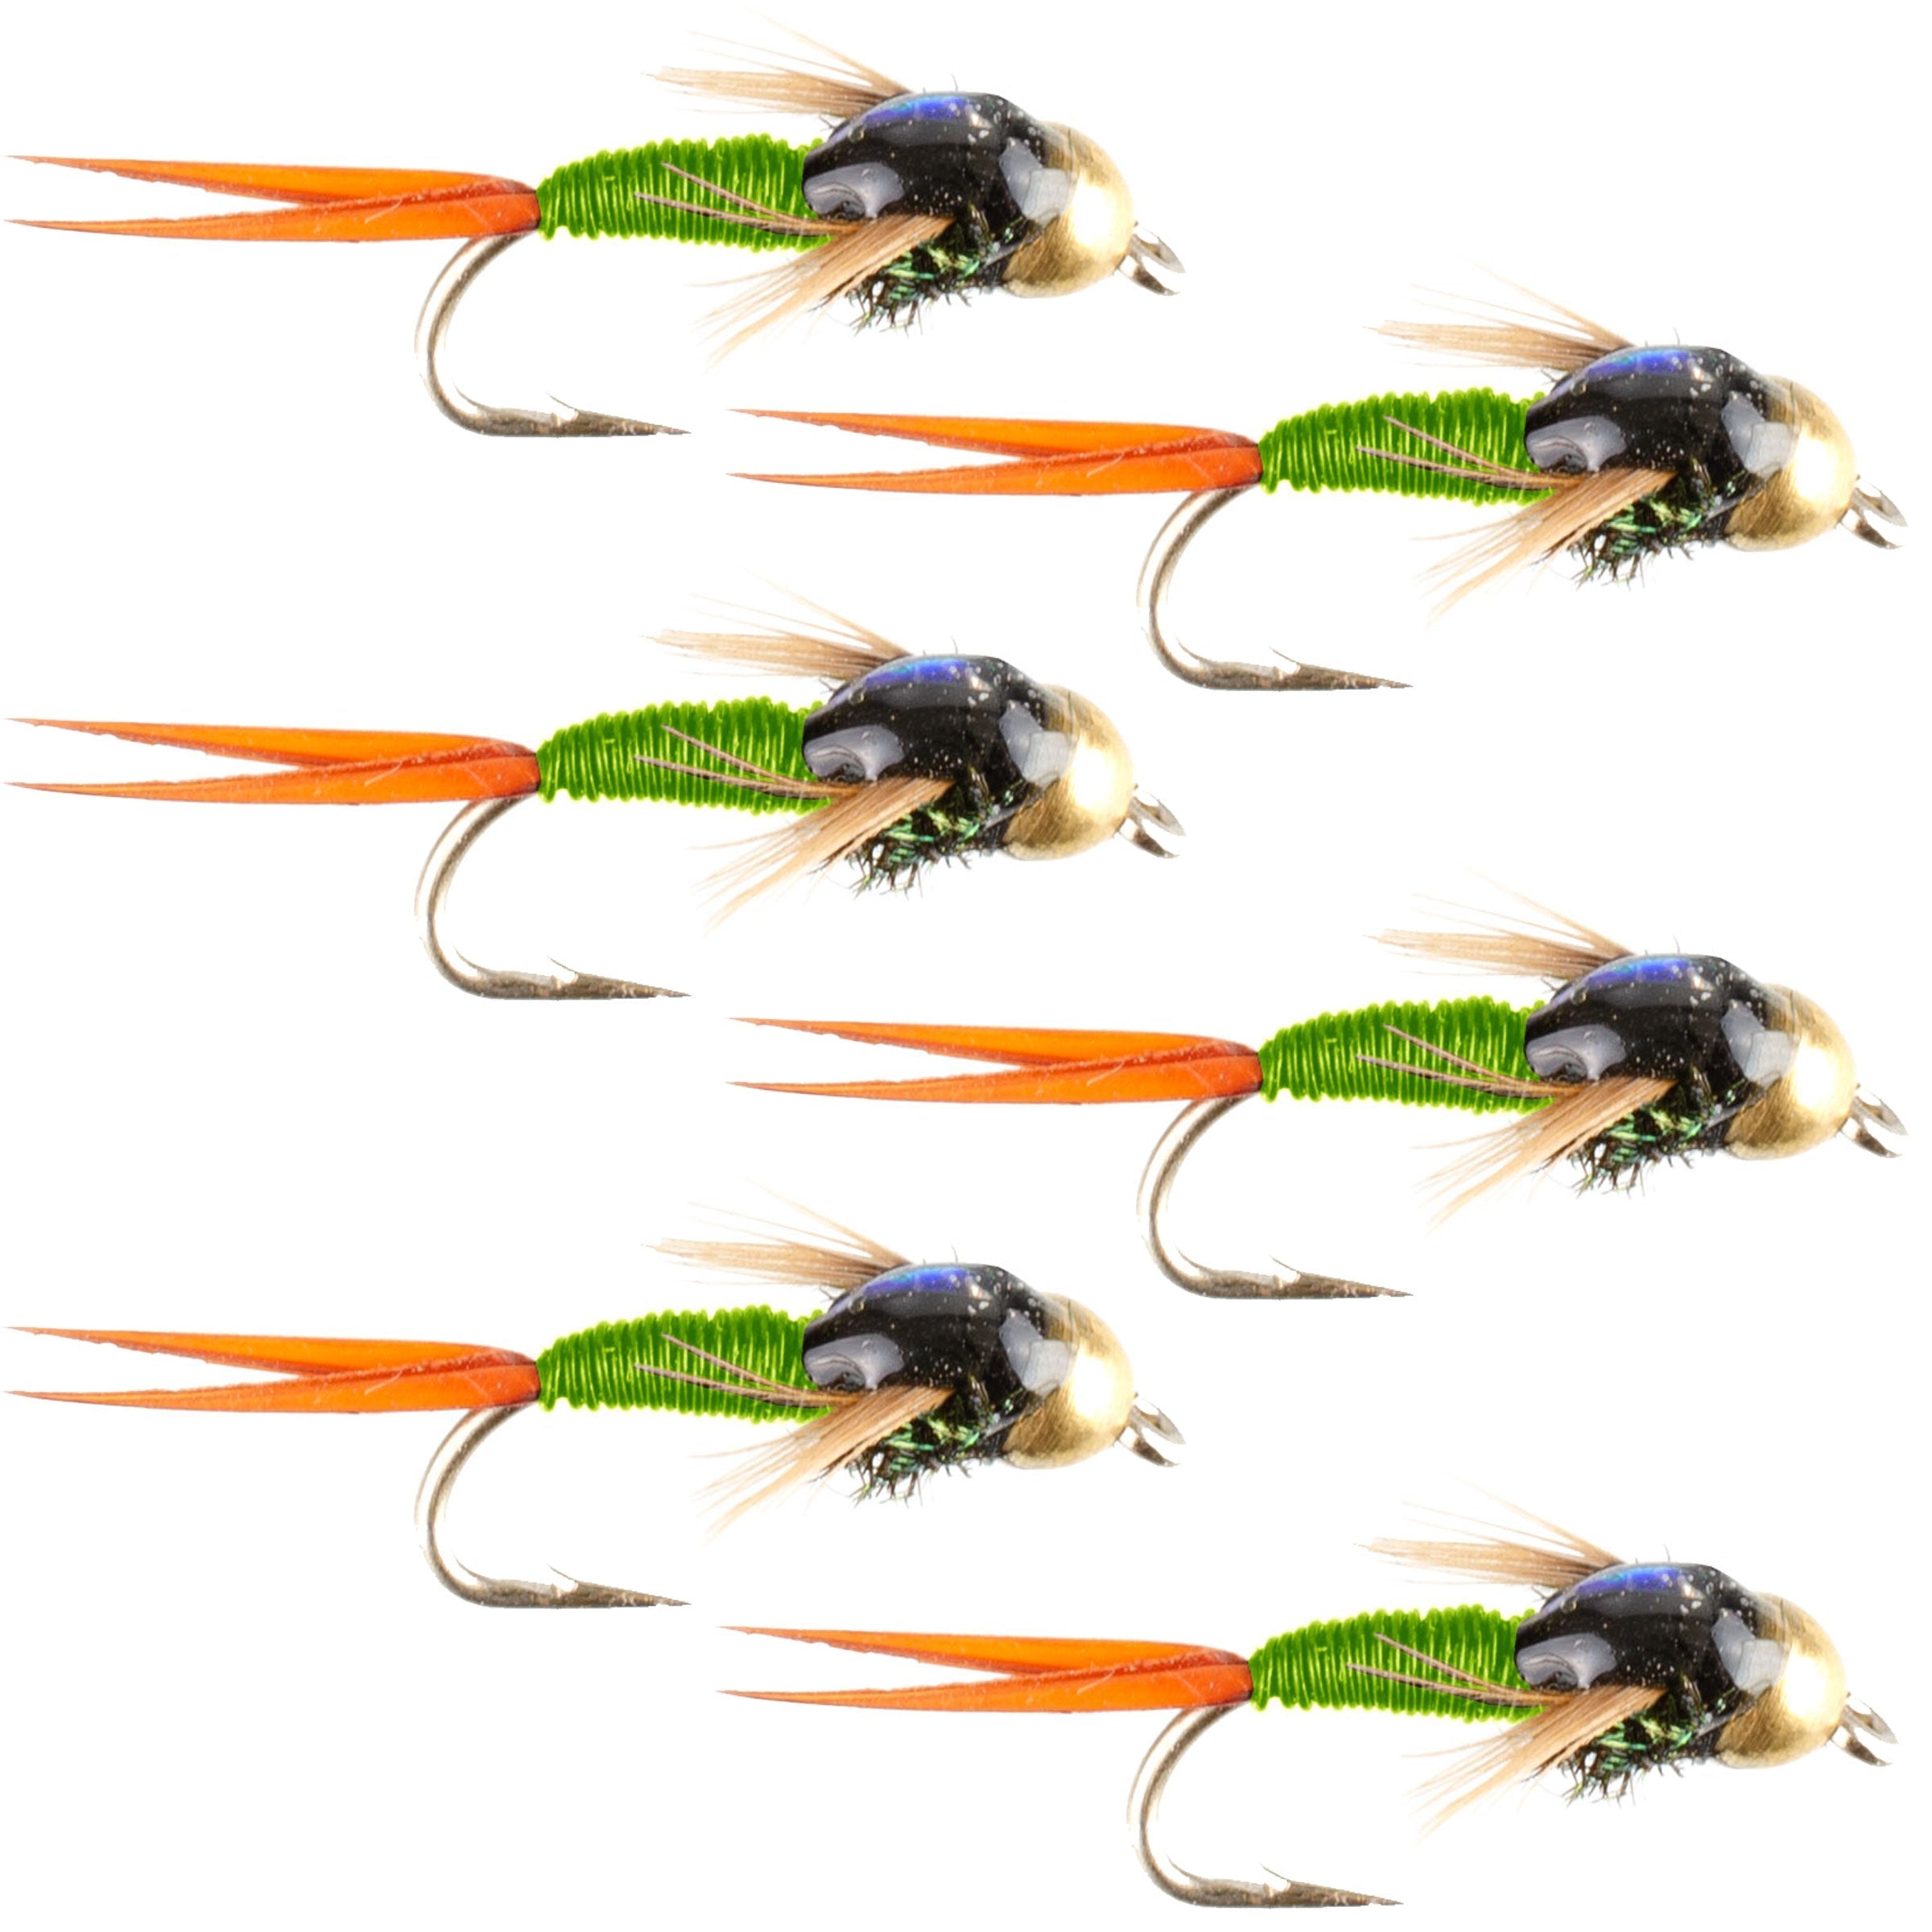 Bead Head Chartreuse Copper John Nymph Fly Fishing Flies - Set of 6 Flies Hook Size 16